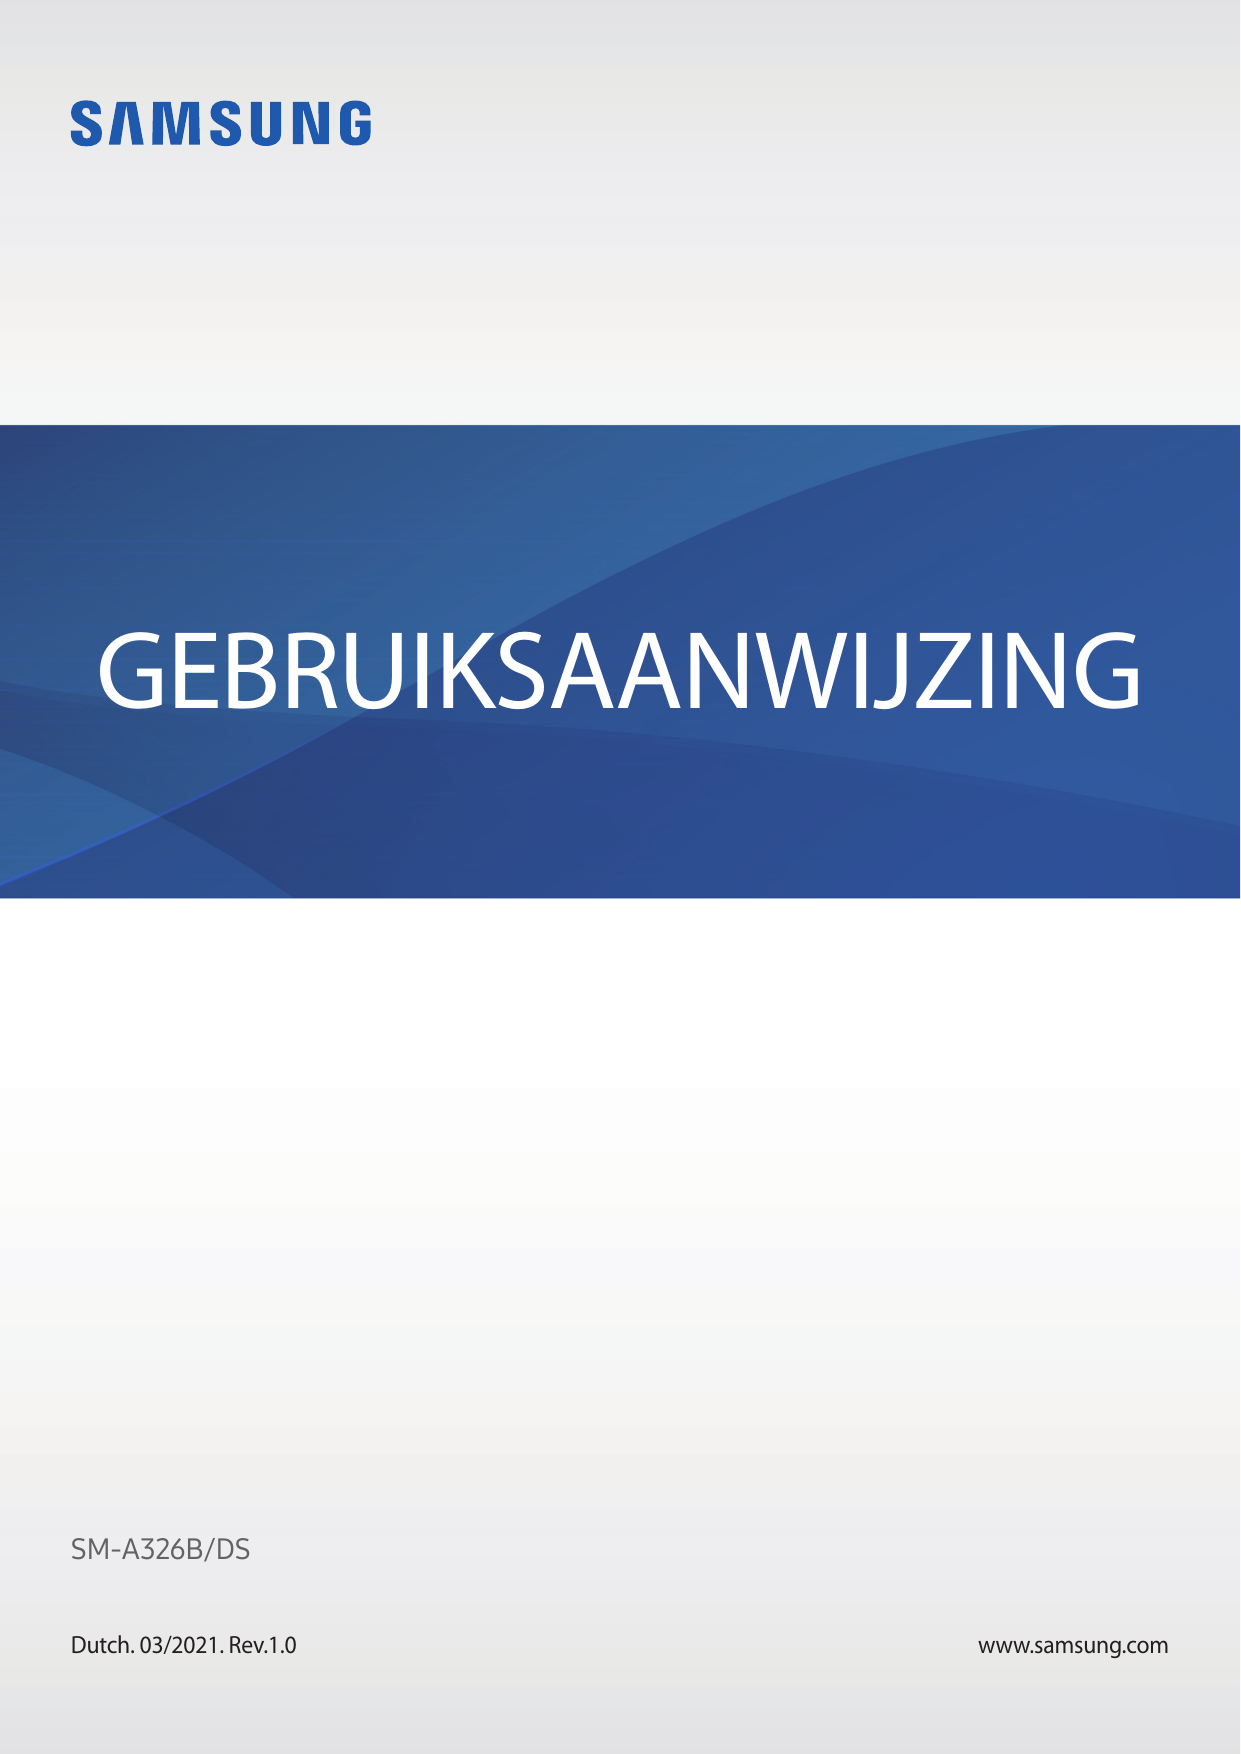 GEBRUIKSAANWIJZINGSM-A326B/DSDutch. 03/2021. Rev.1.0www.samsung.com